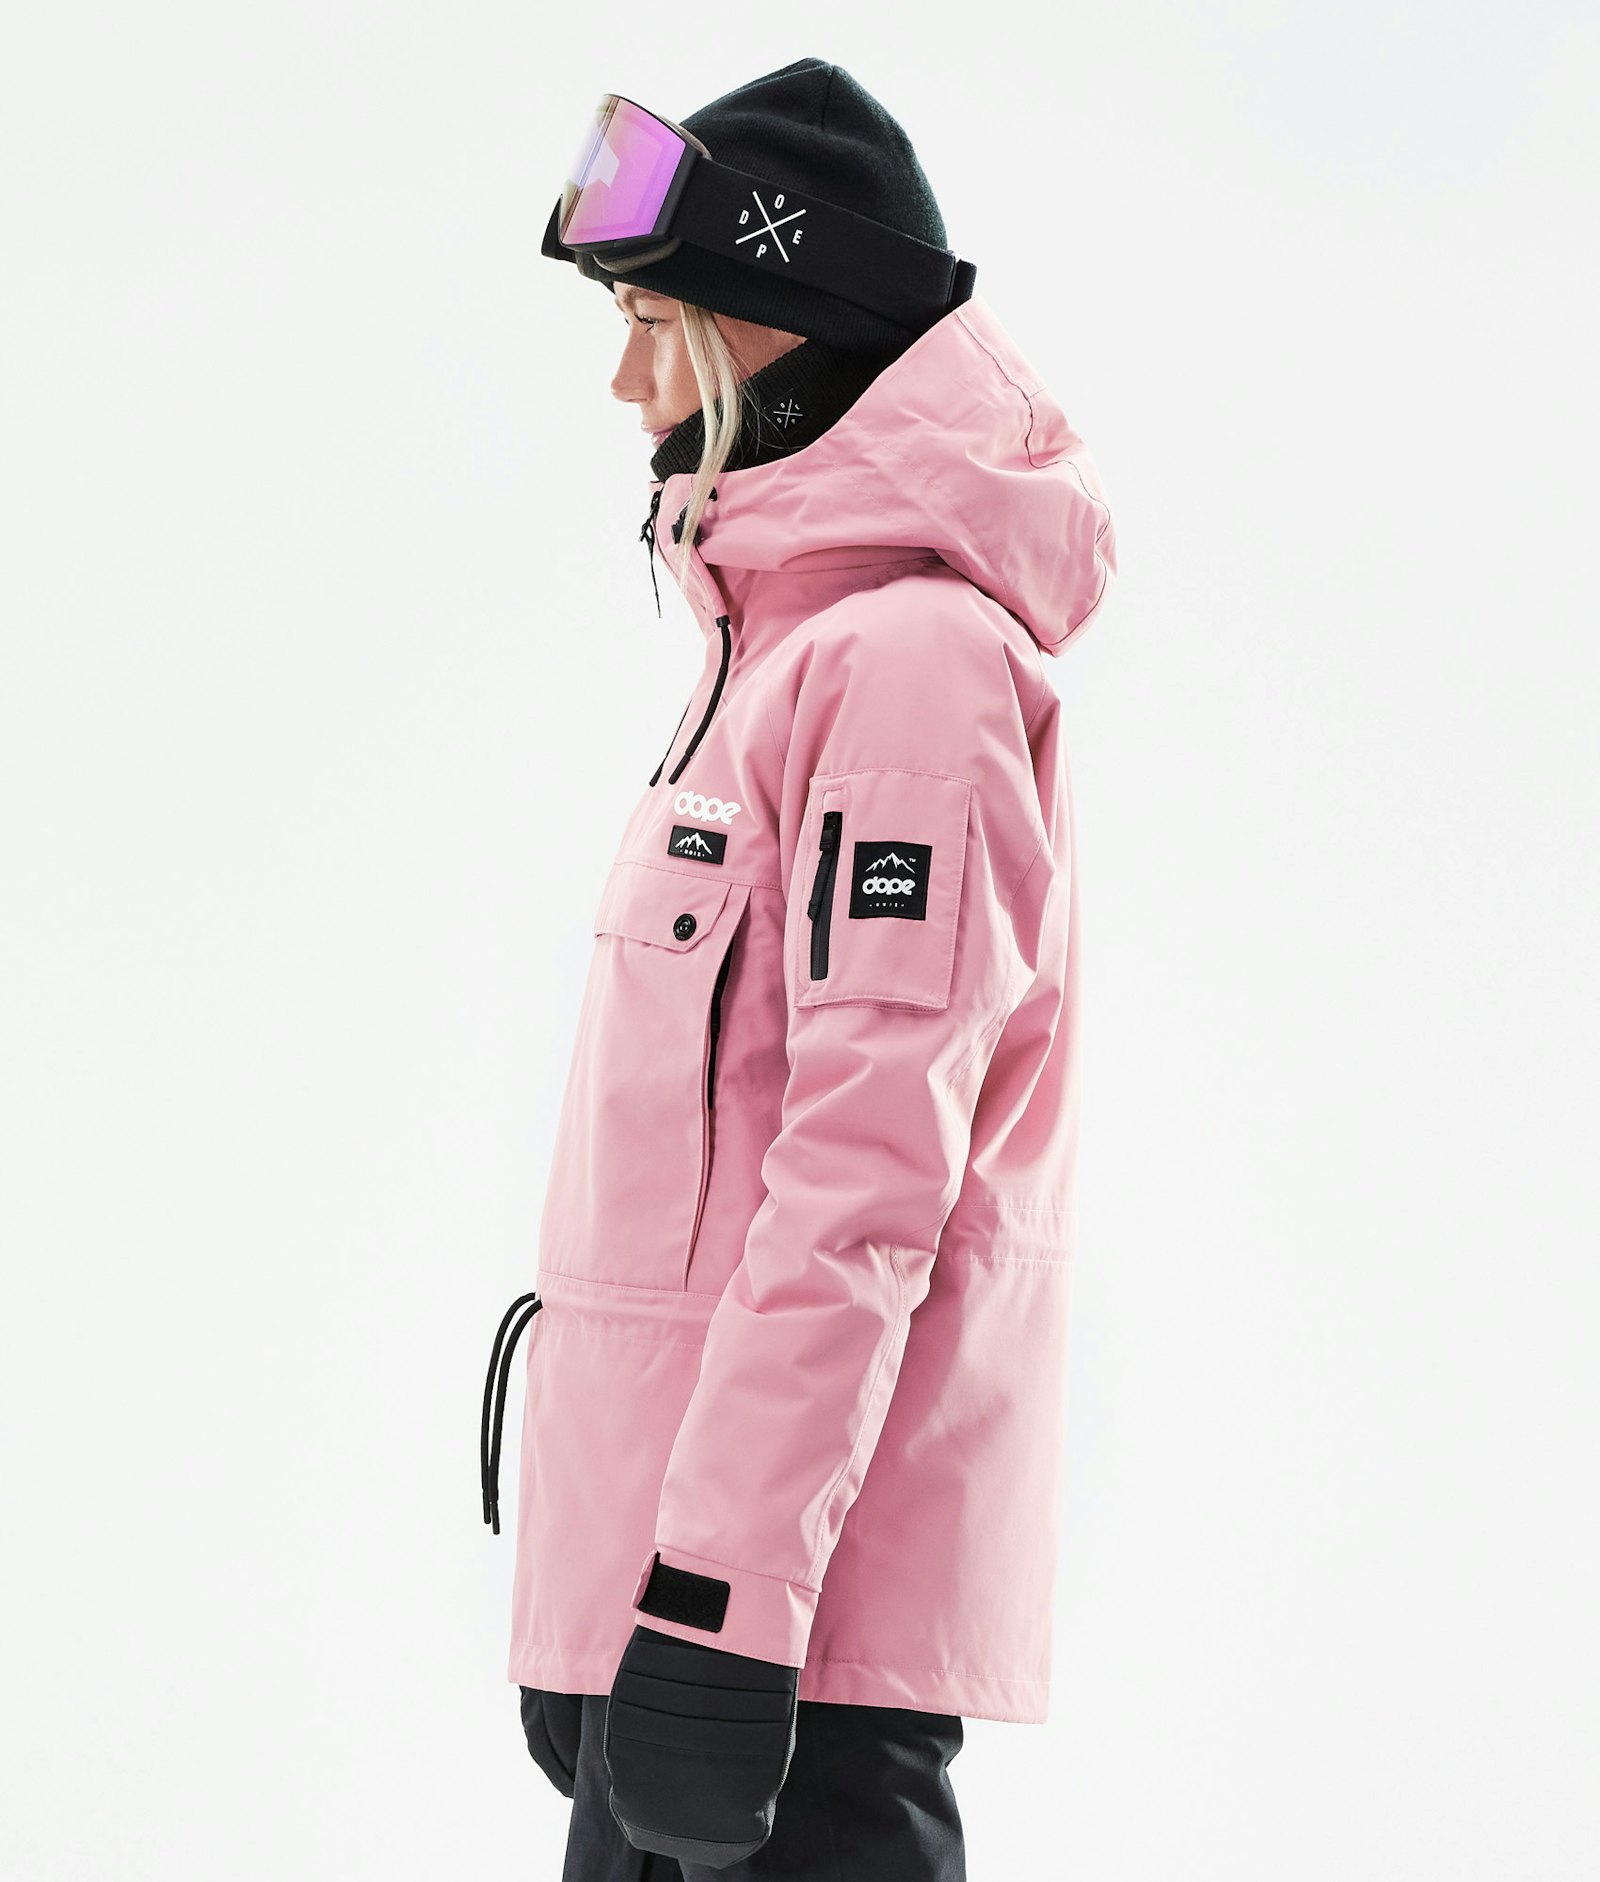 Annok W 2021 Snowboardjacke Damen Pink